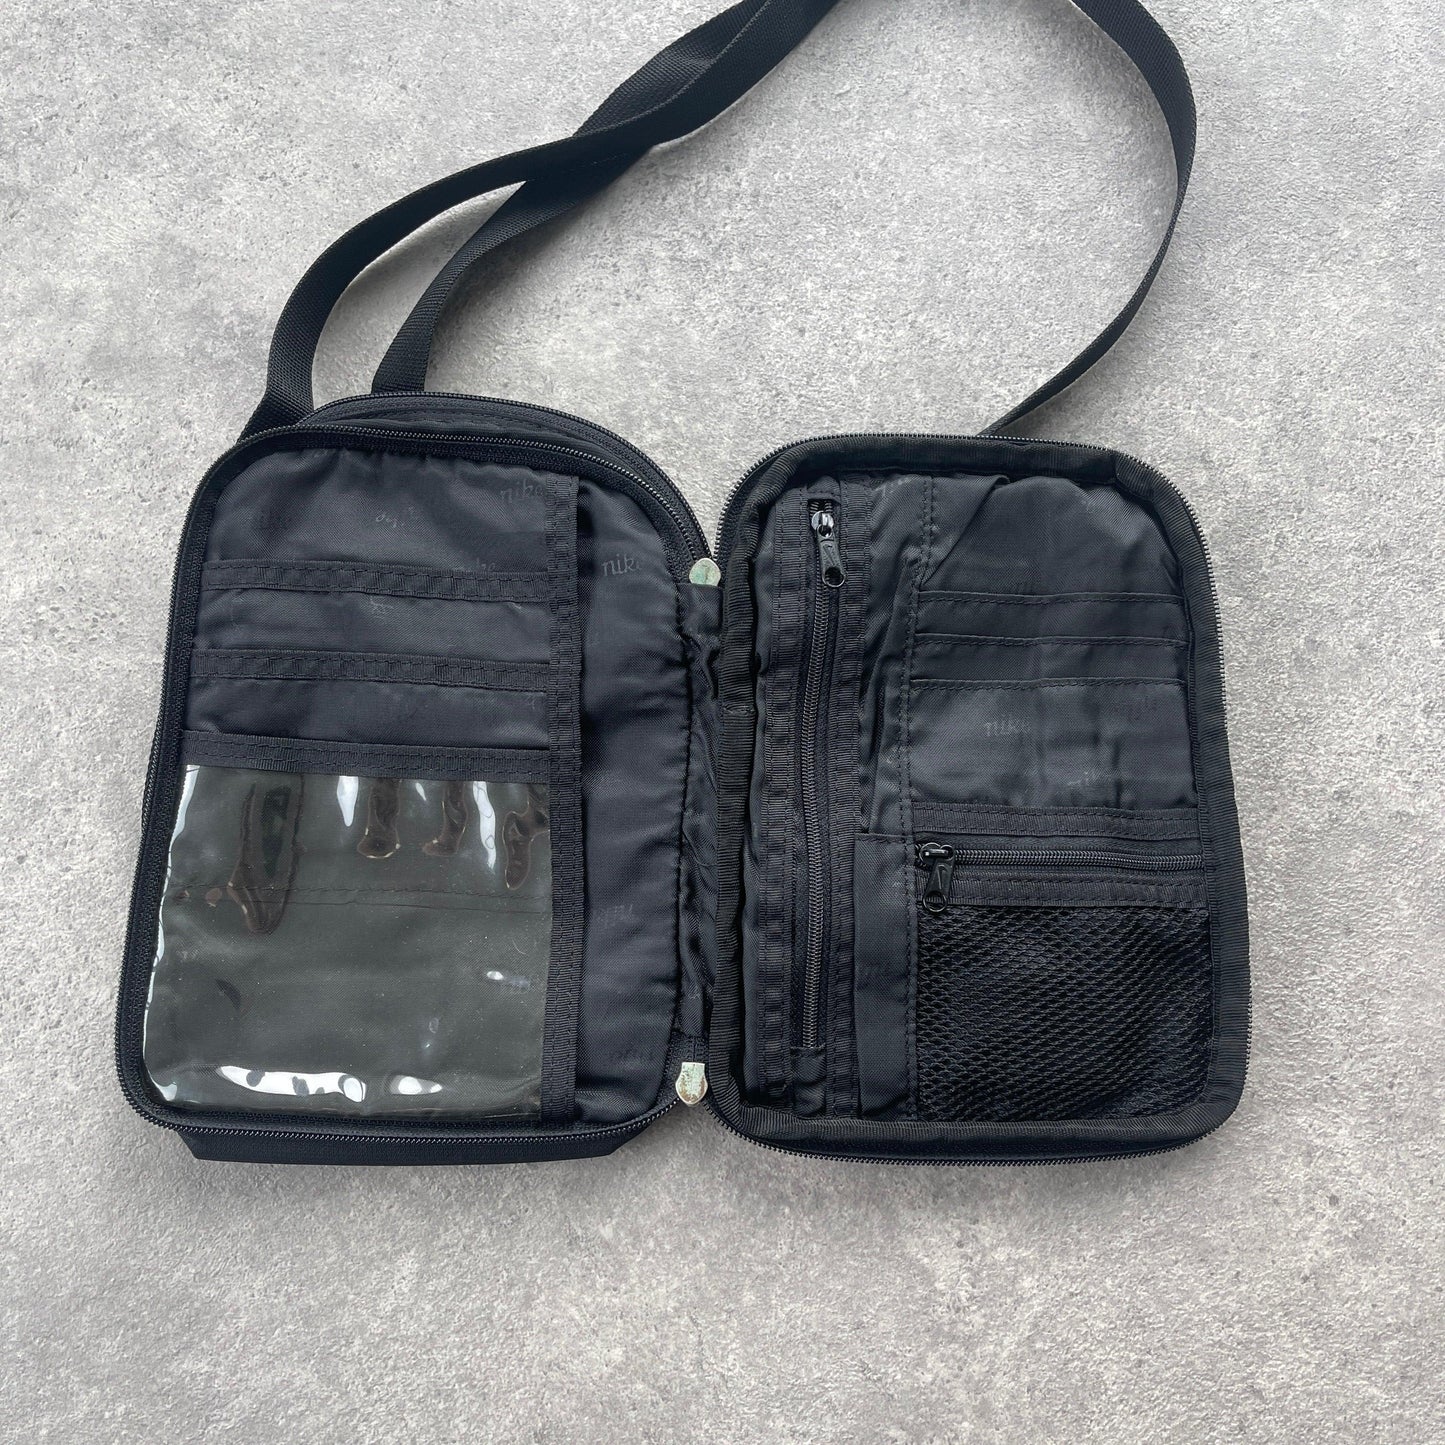 Nike 1990s cross body technical utility bag (10”x7”x3”) - Known Source